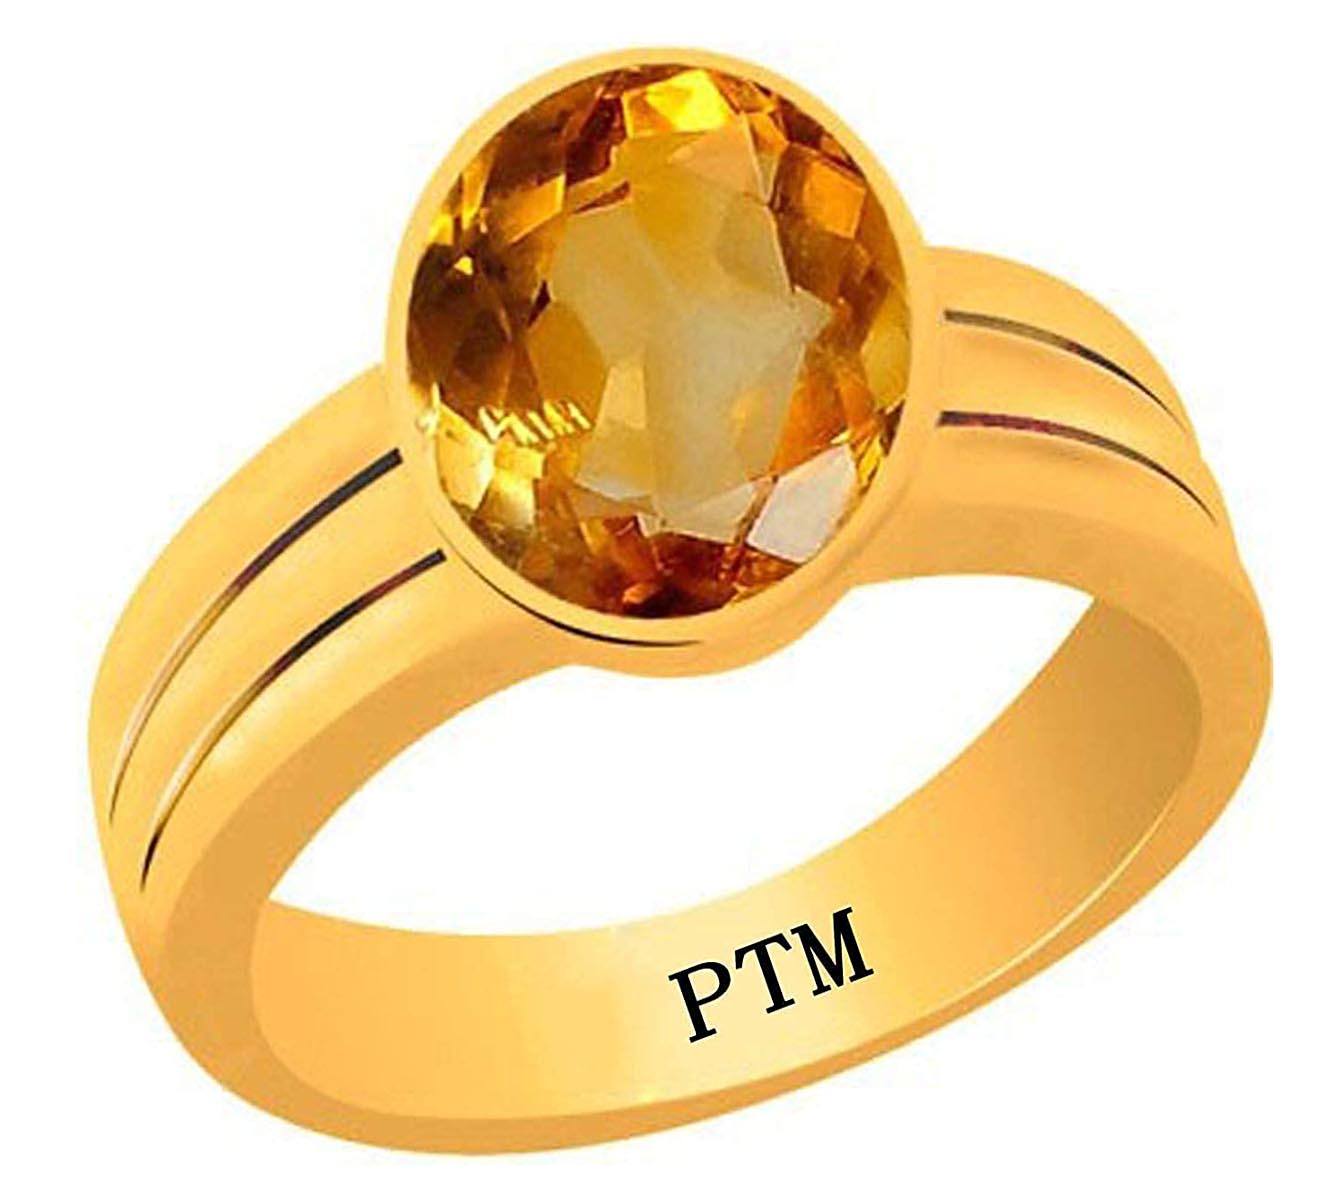 Buy quality Casting gold ring in 22karat in Pune